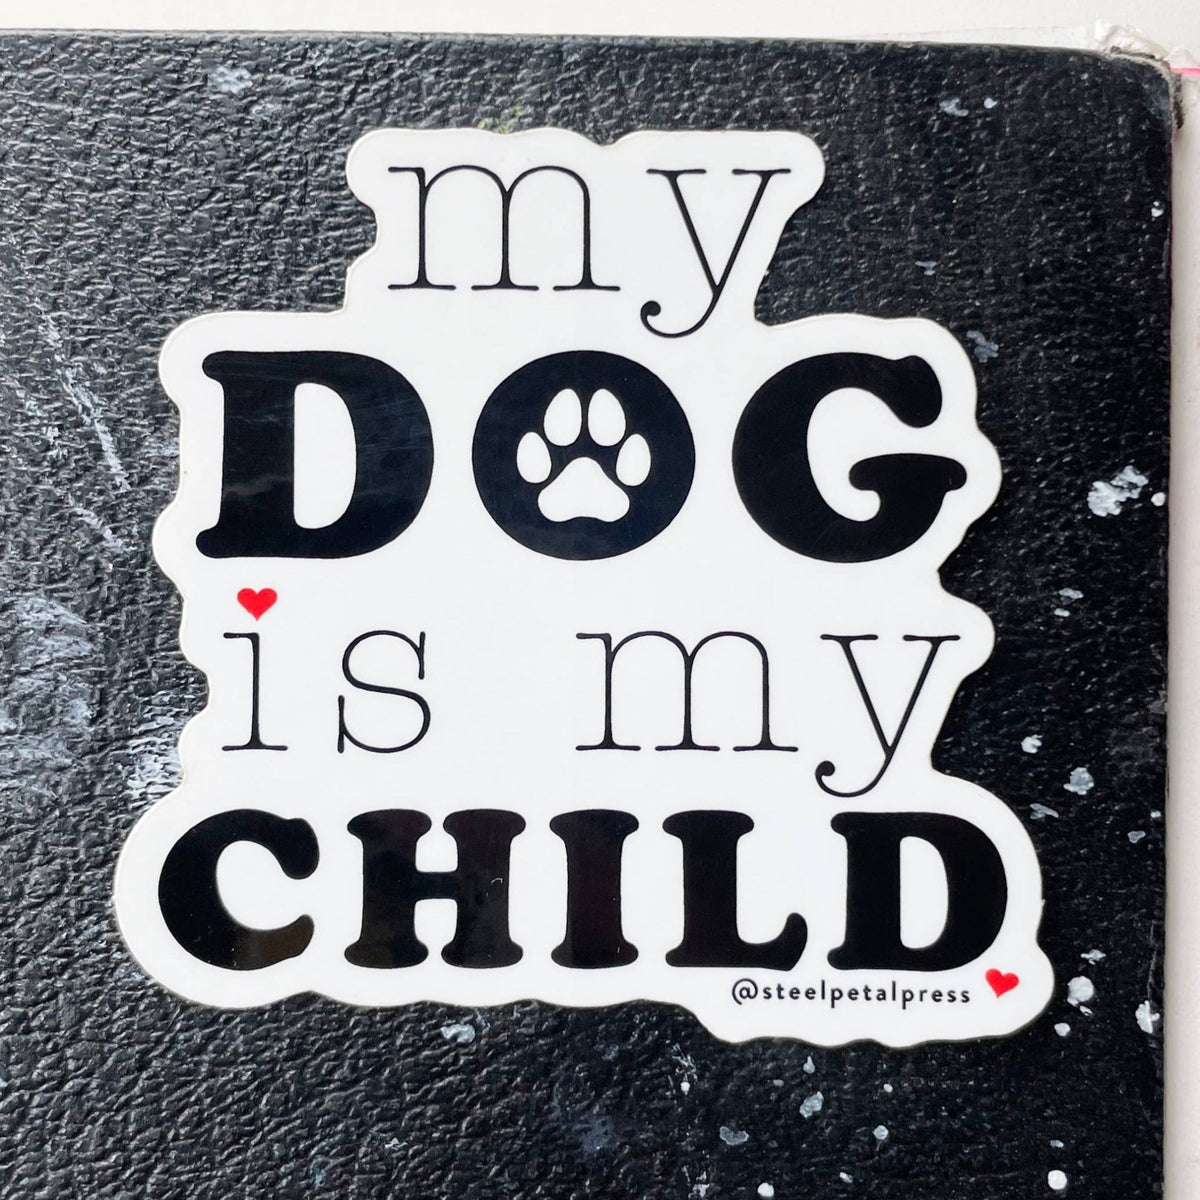 Sticker - Dog Child - Gift & Gather